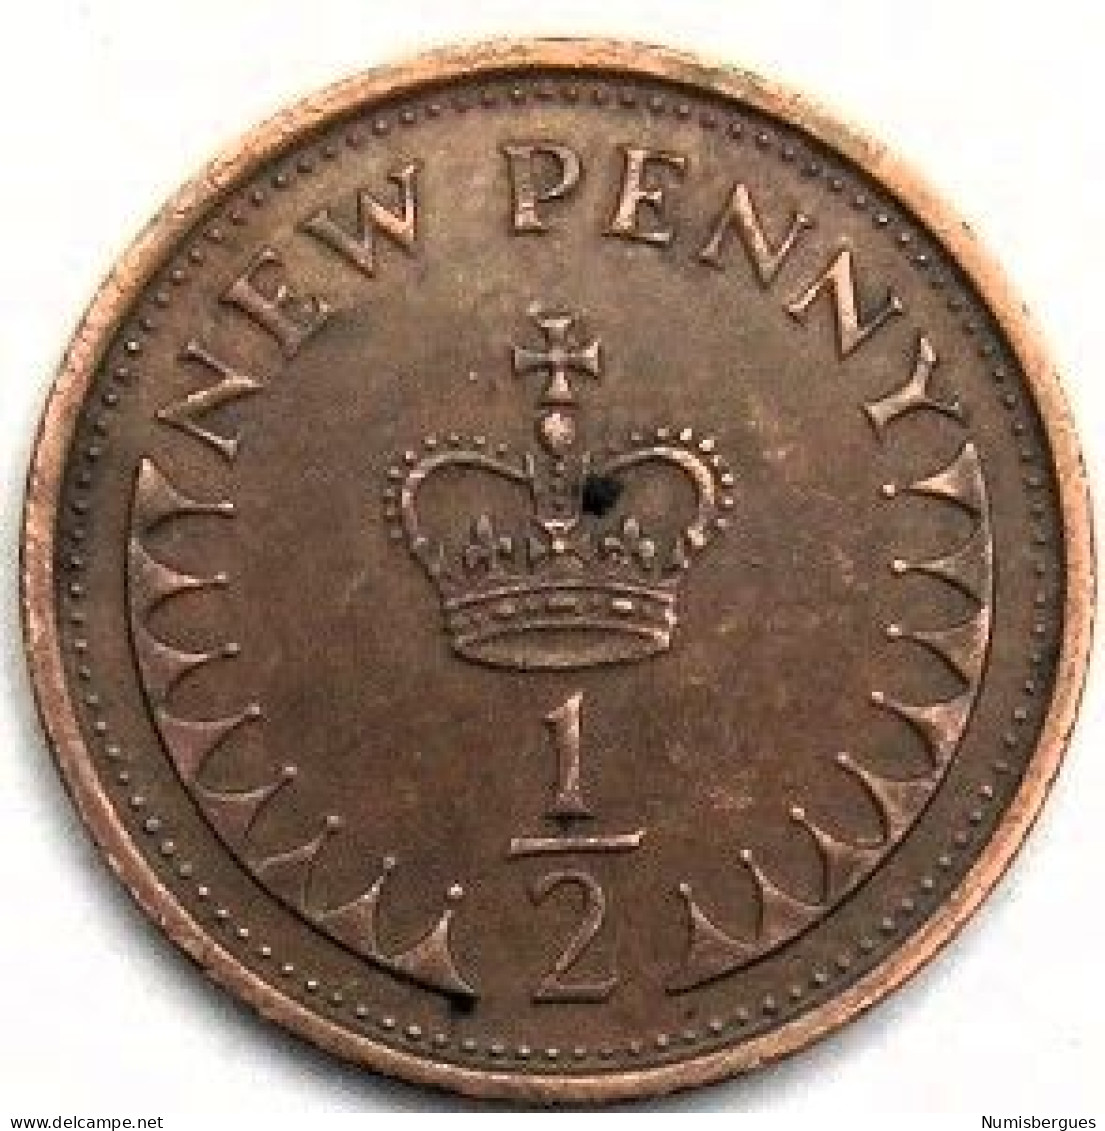 Pièce De Monnaie 1/2 Penny 1974 - 1/2 Penny & 1/2 New Penny